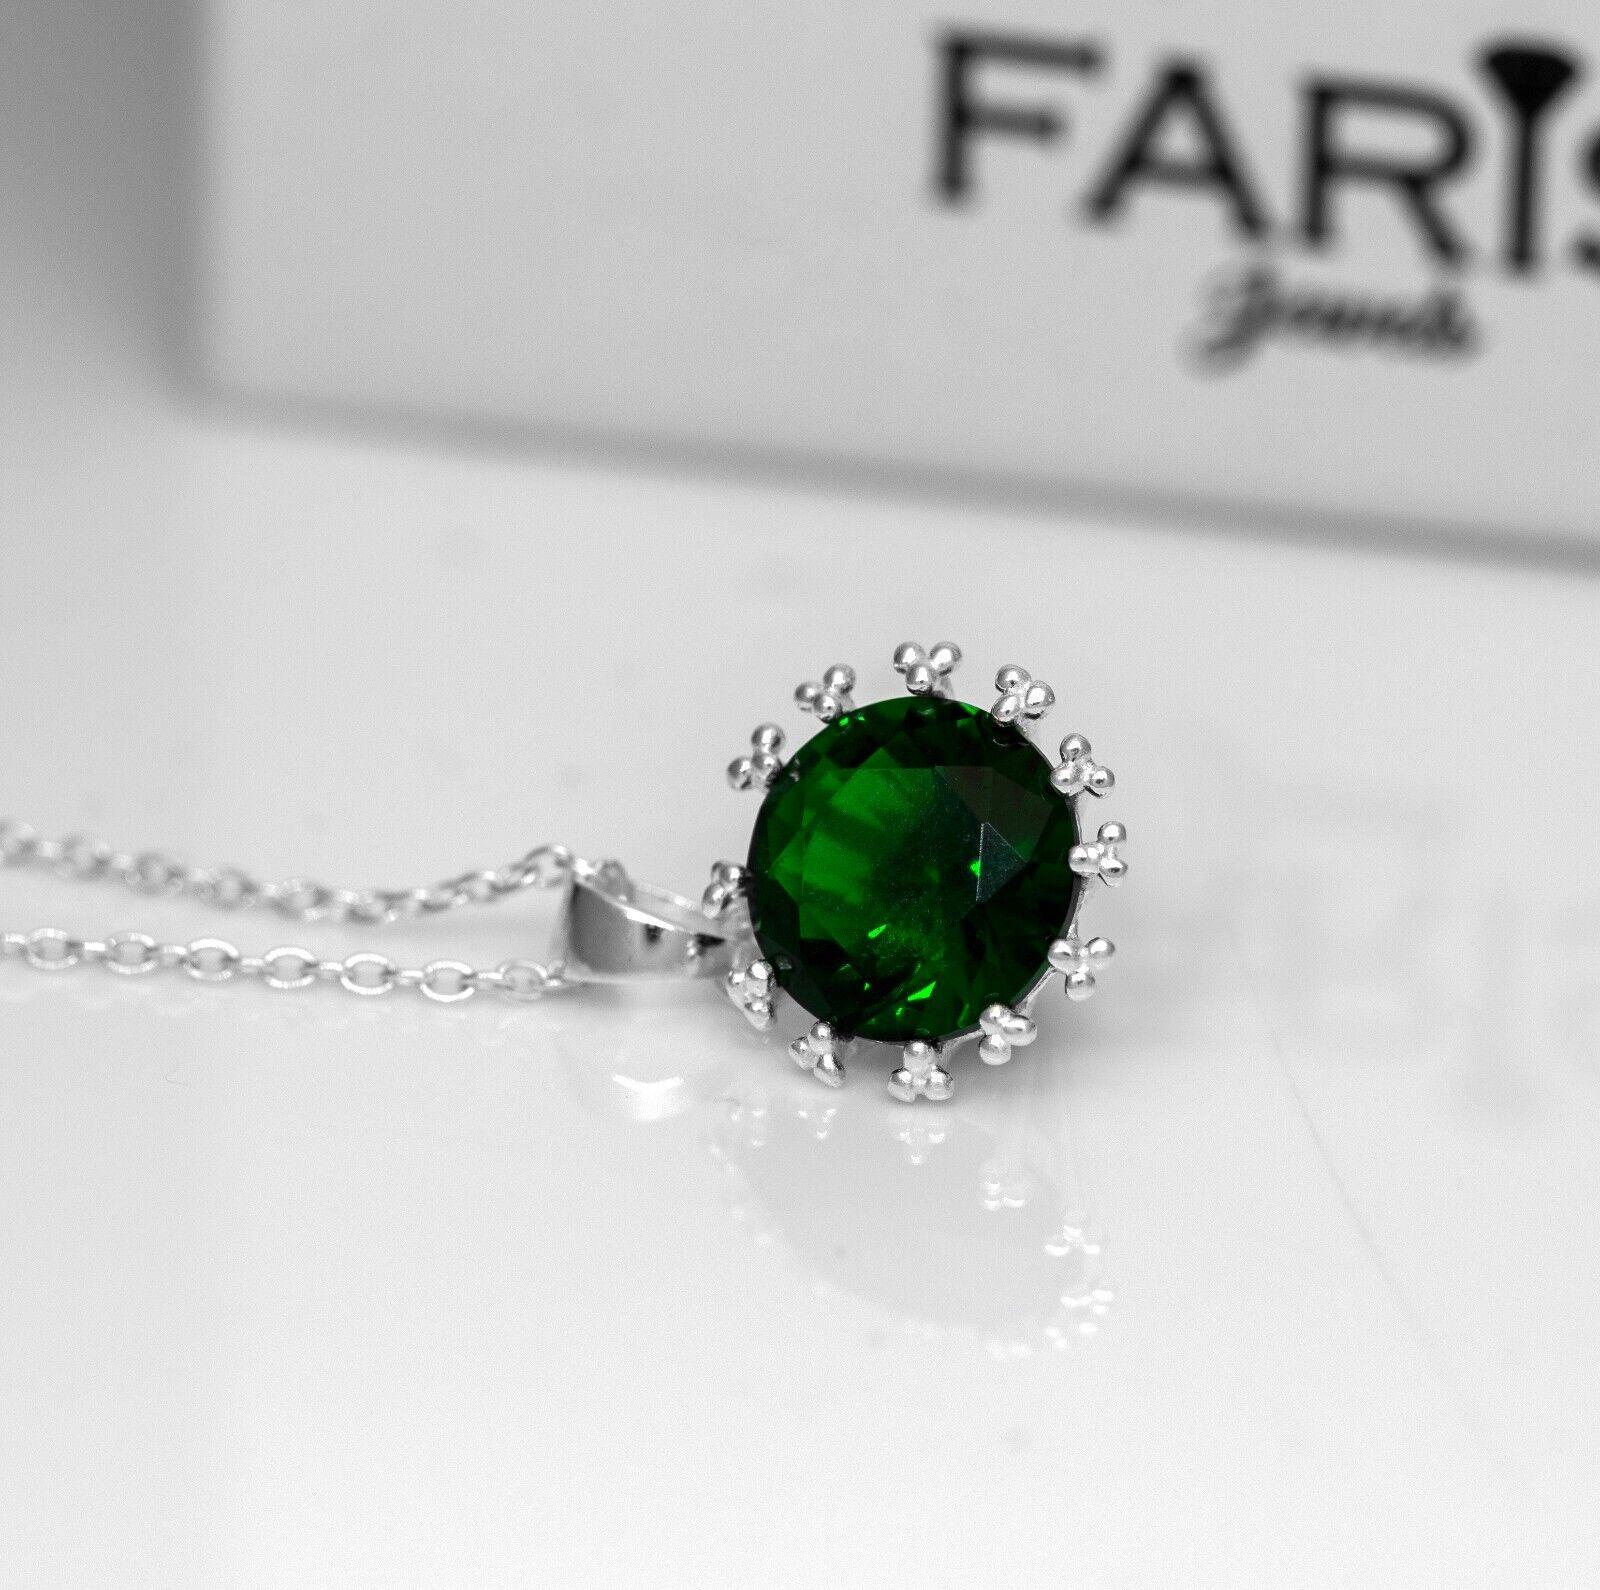 Green Emerald Sterling Silver Ladies Pendant Necklace Earrings Set Jewellery